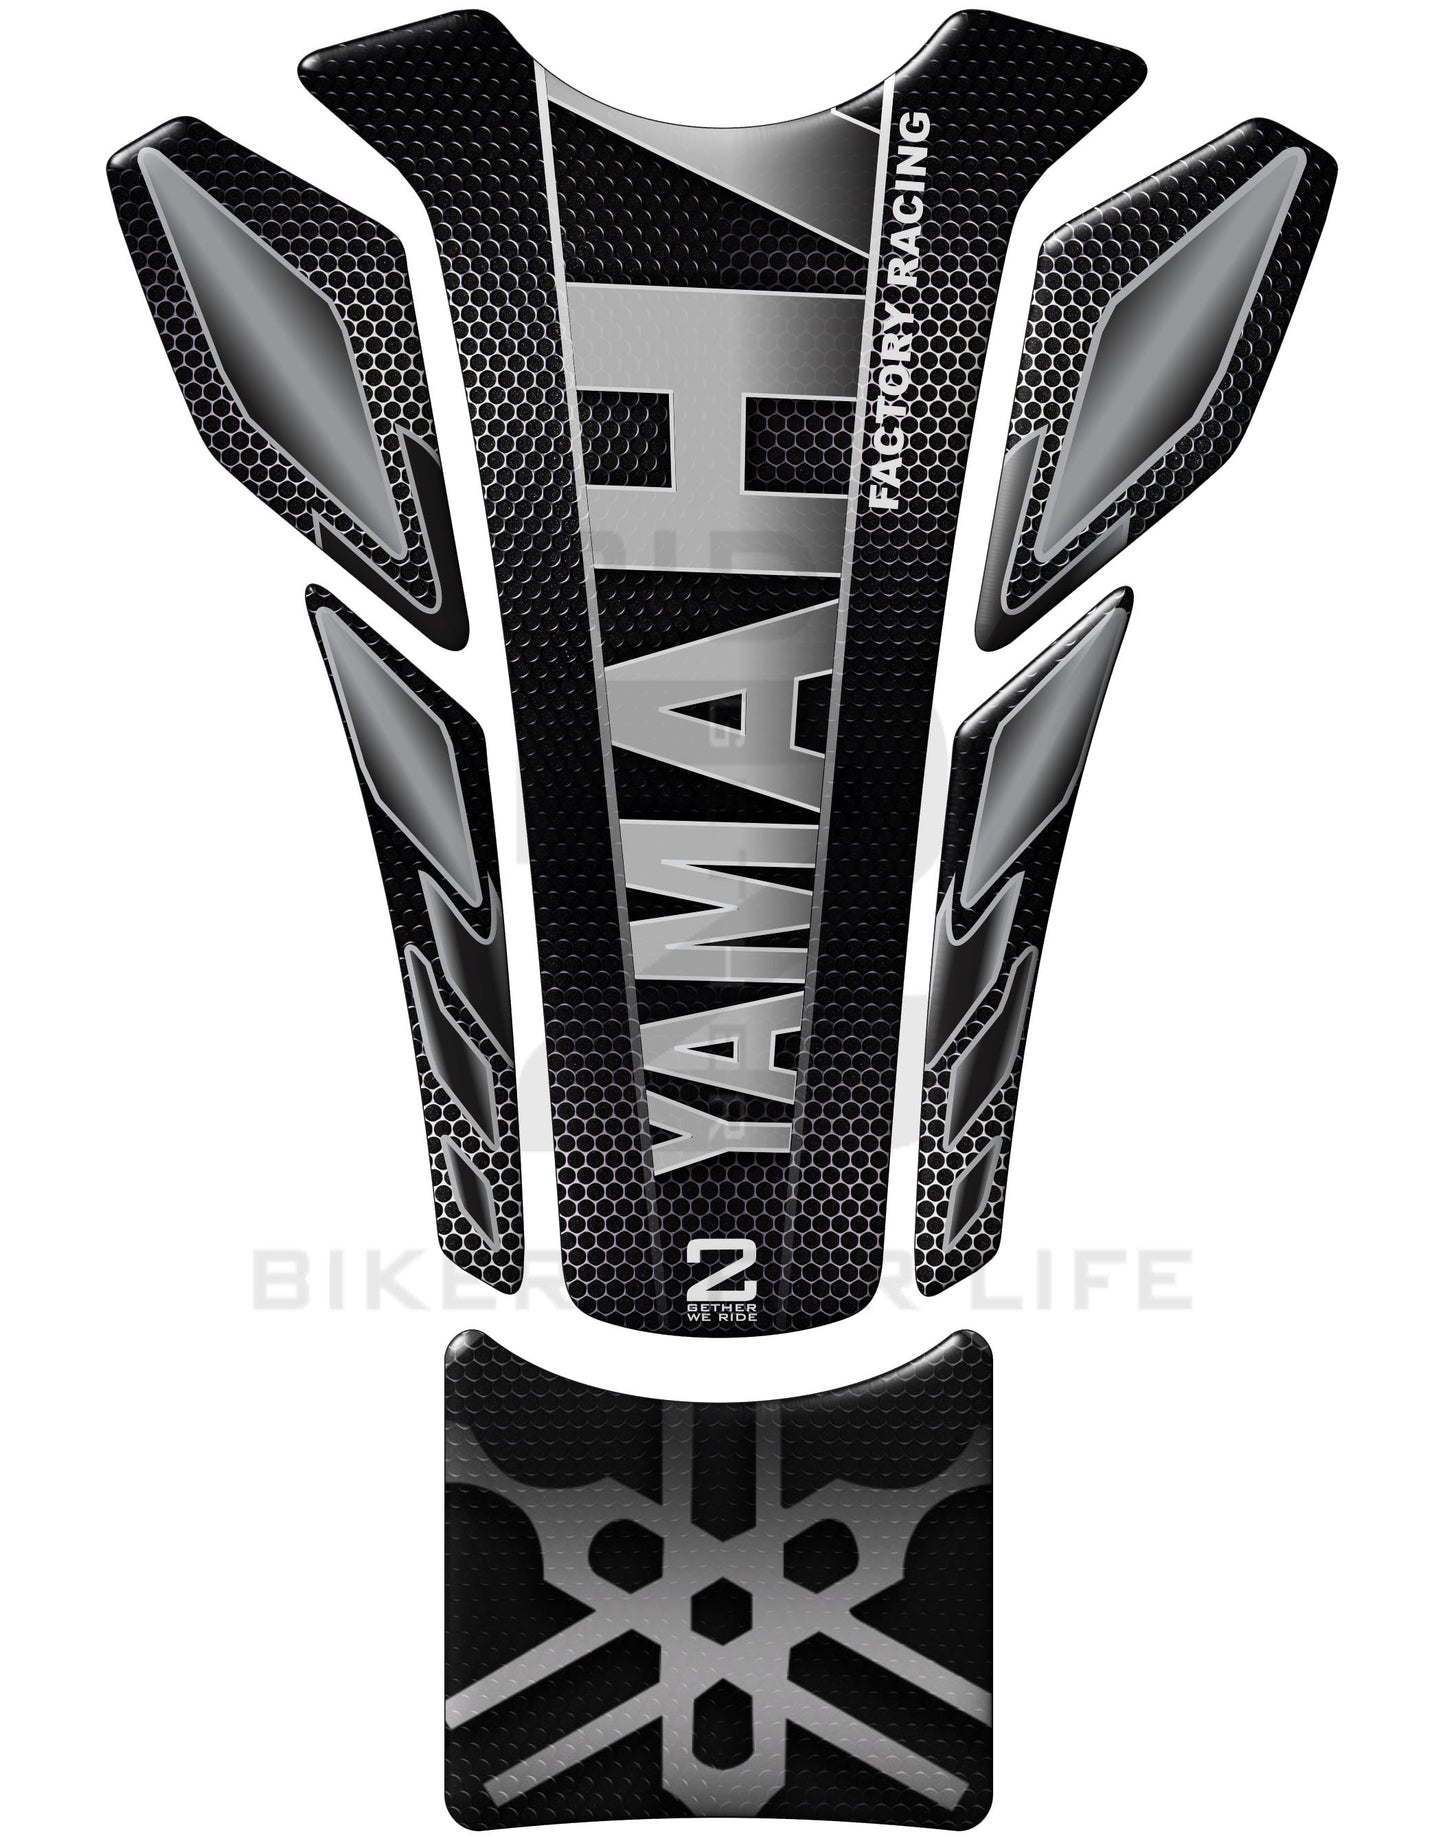 Yamaha Factory Racing Black and Silver Universal Fit Motor Bike Tank Pad Protectors